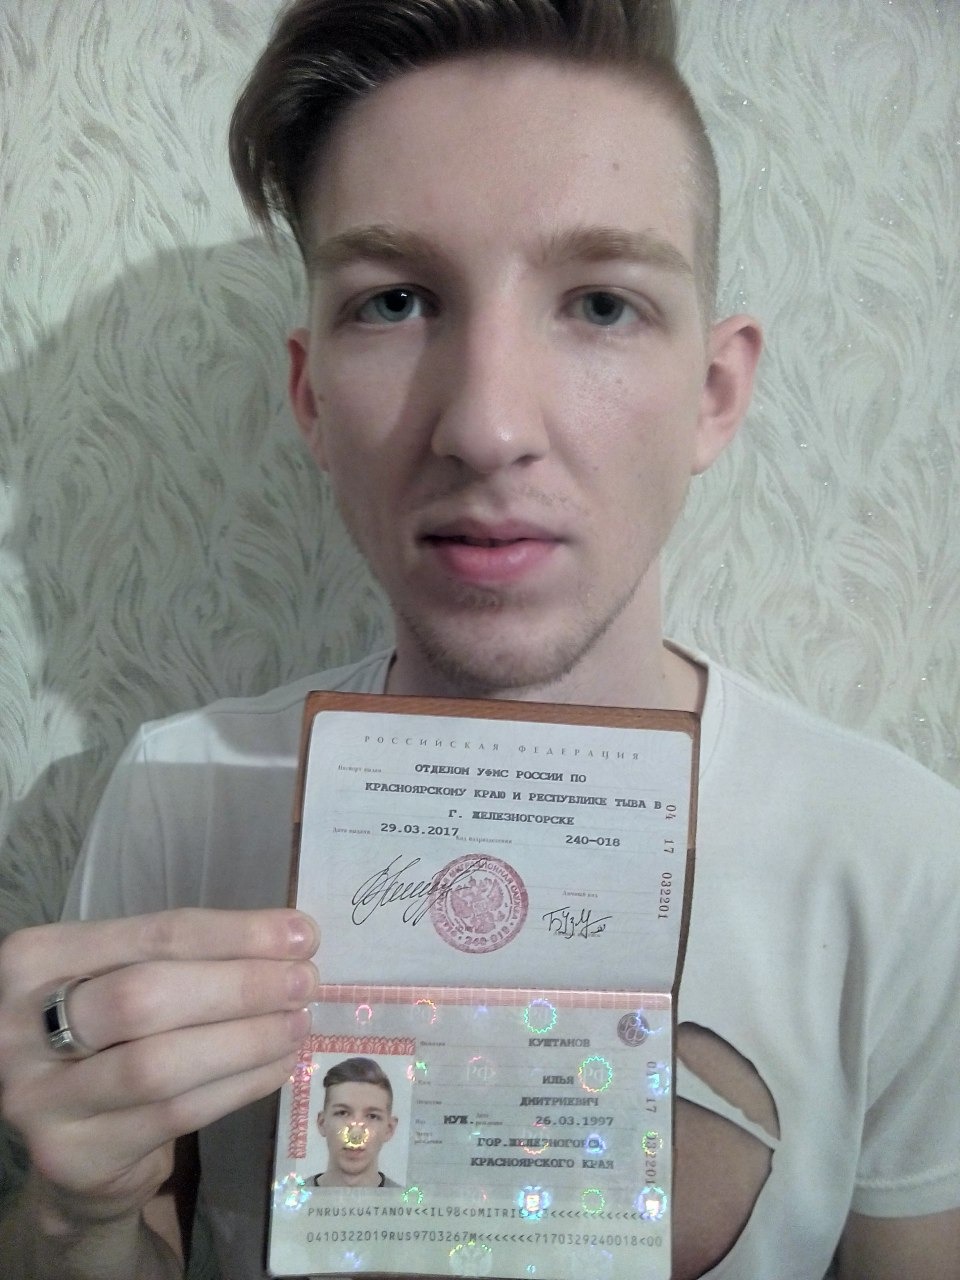 Паспорта и селфи с паспортом фото